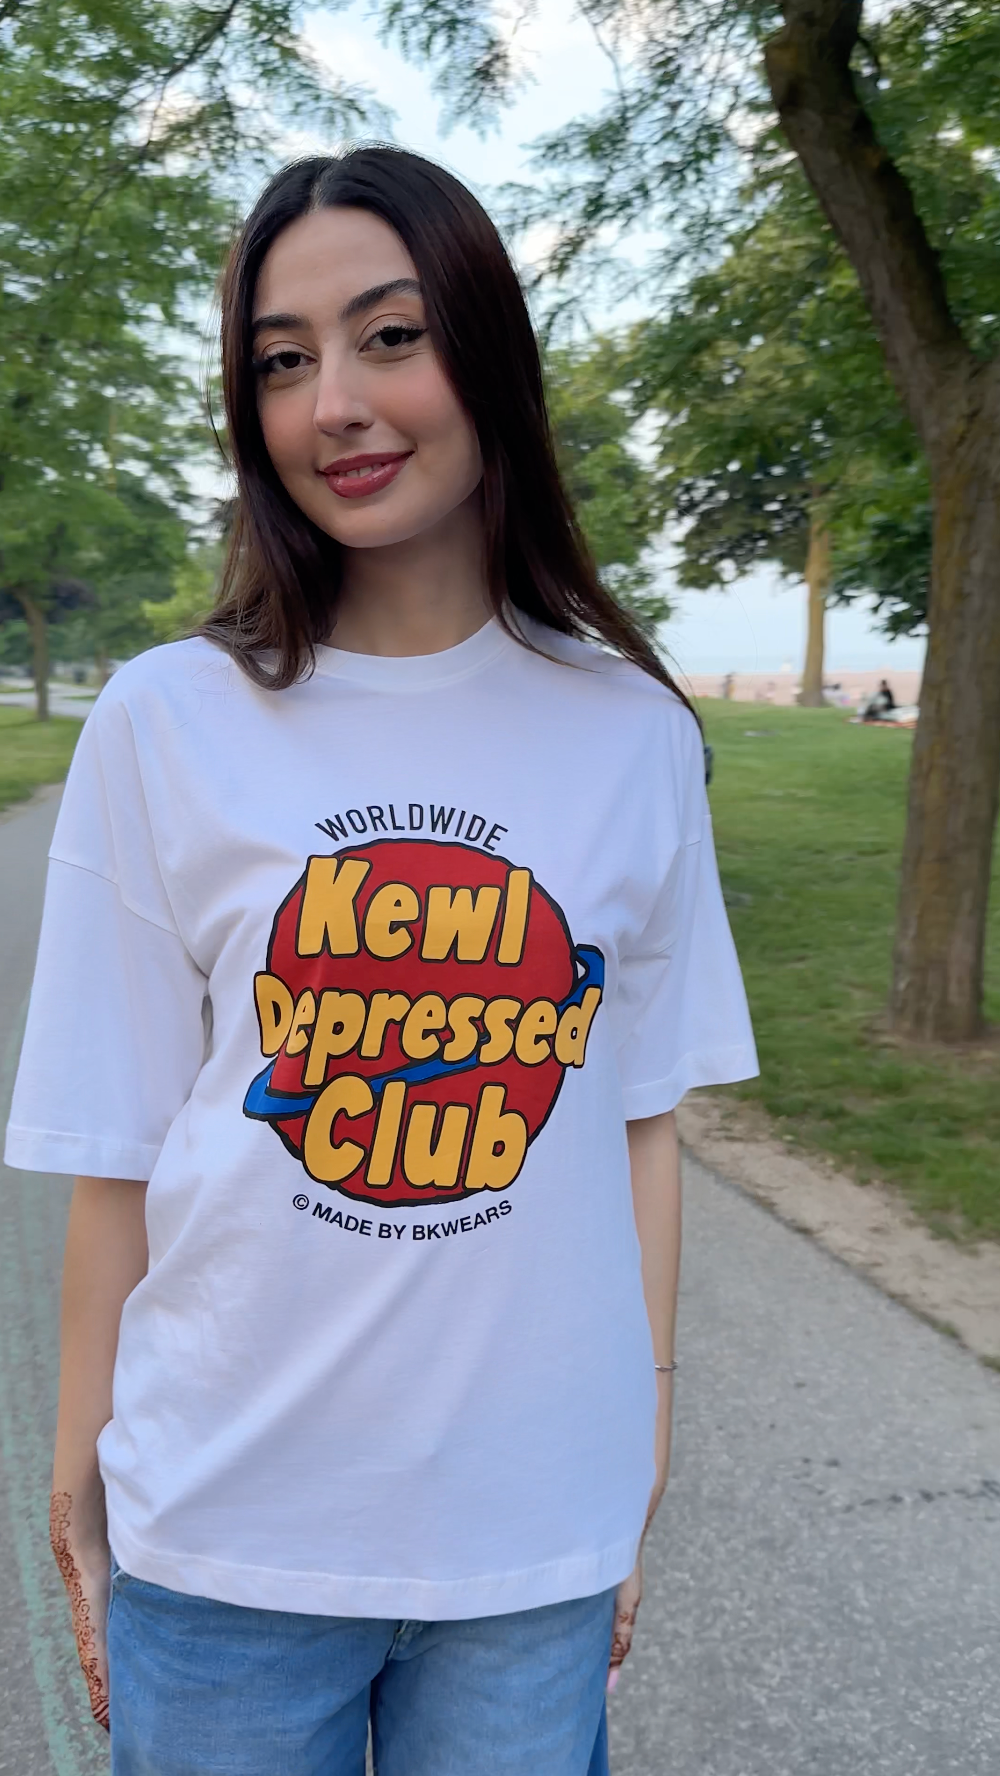 Kewl Depressed Club